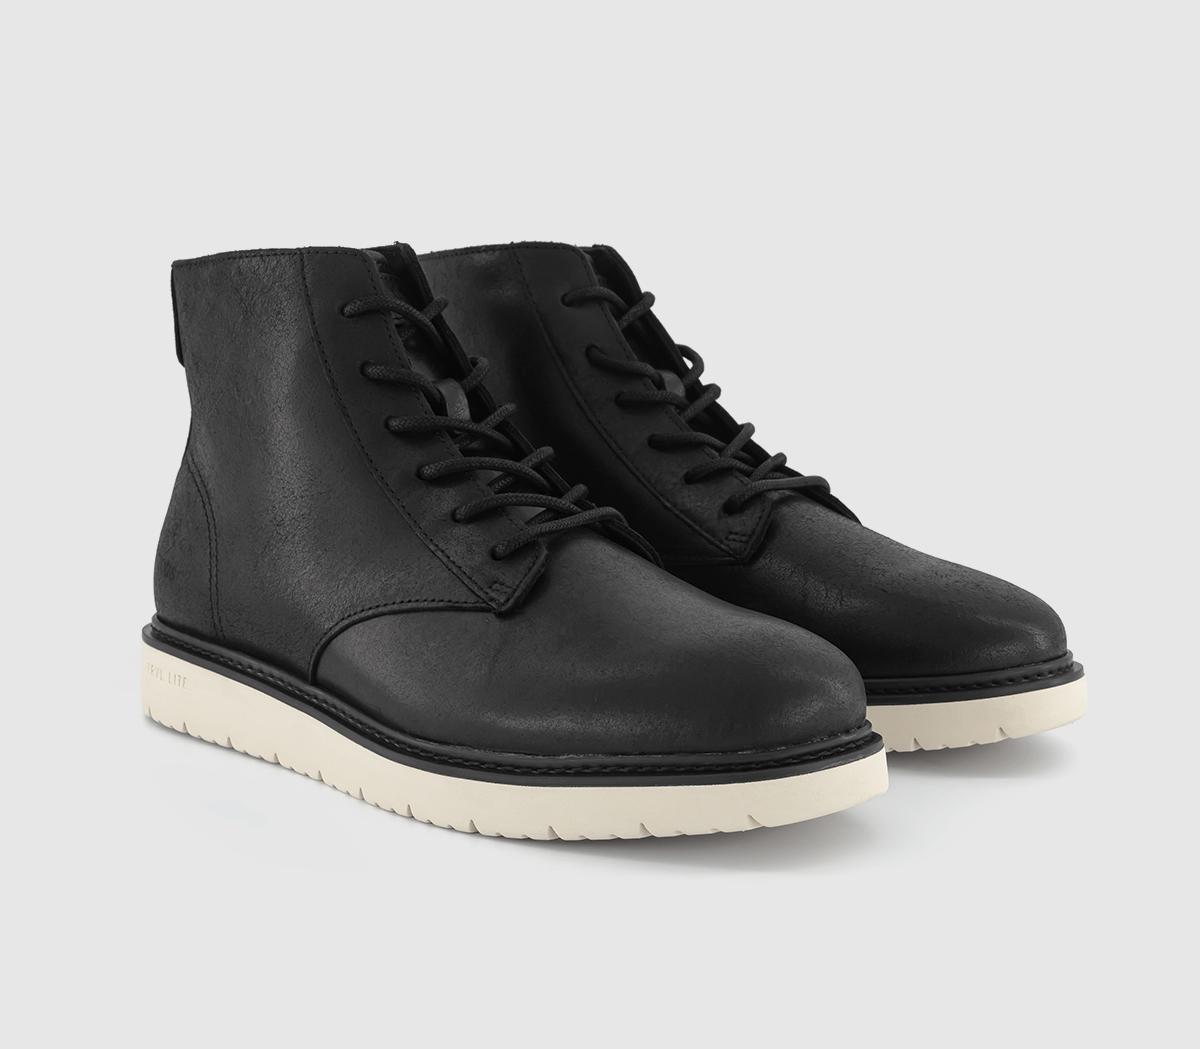 TOMS Mens Navi Trvl Lite Ranger Shoes Black Leather, 10